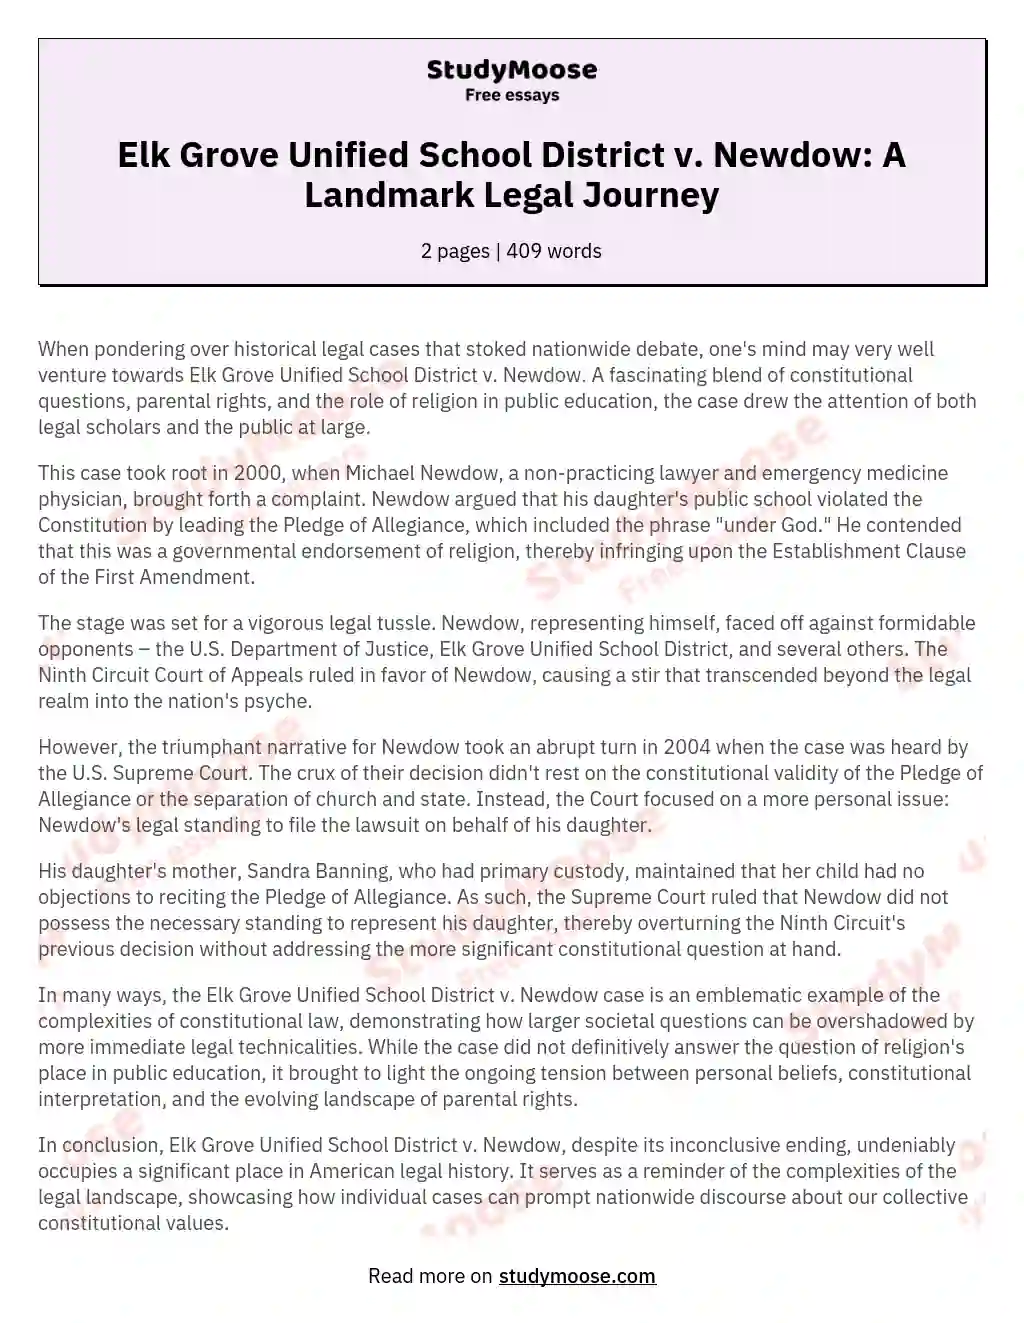 Elk Grove Unified School District v. Newdow: A Landmark Legal Journey essay